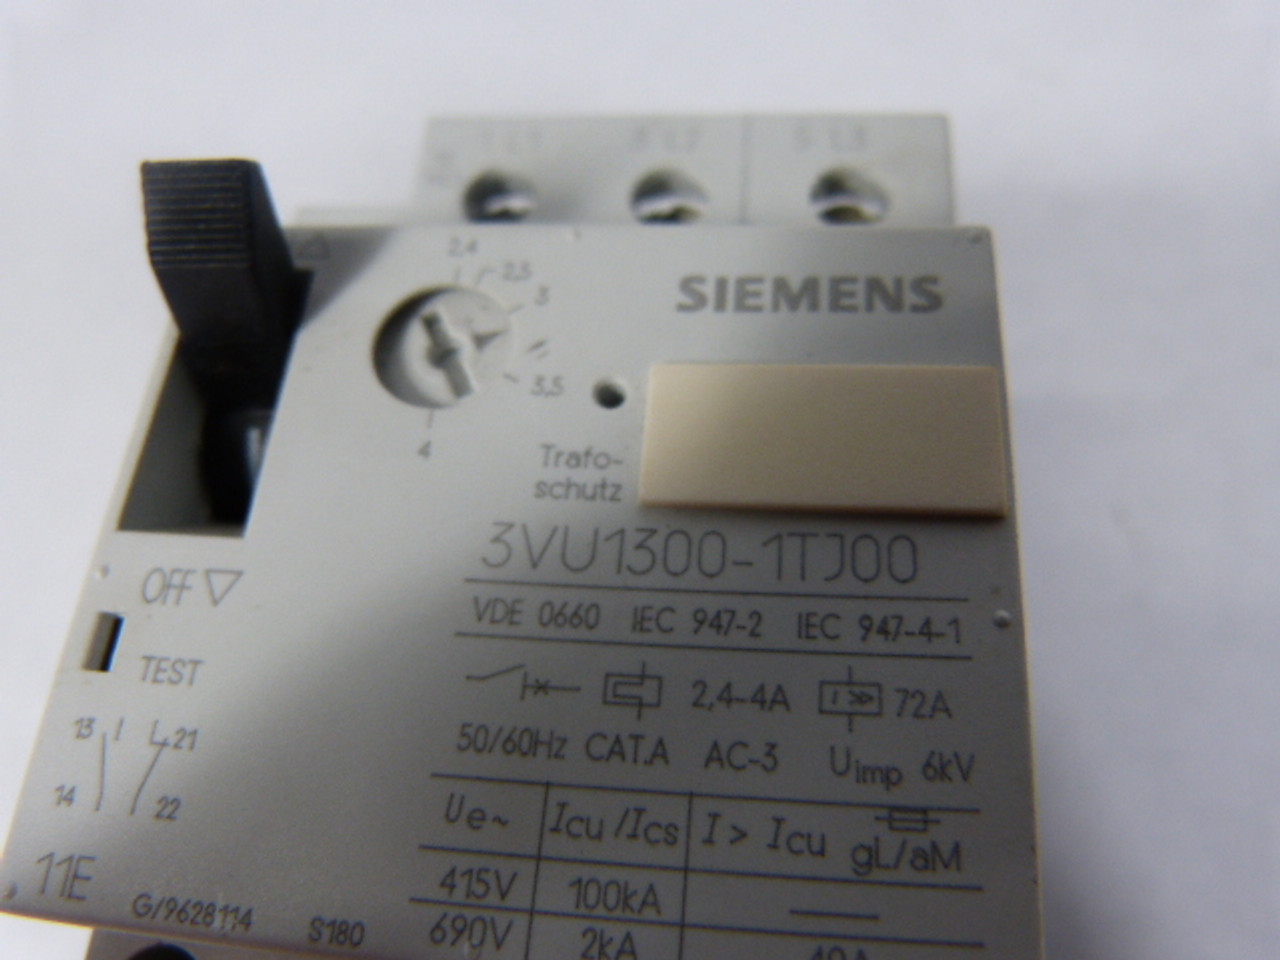 Siemens 3VU1-300-1TJ00 Starter Motor Protector 2.4-4Amp USED